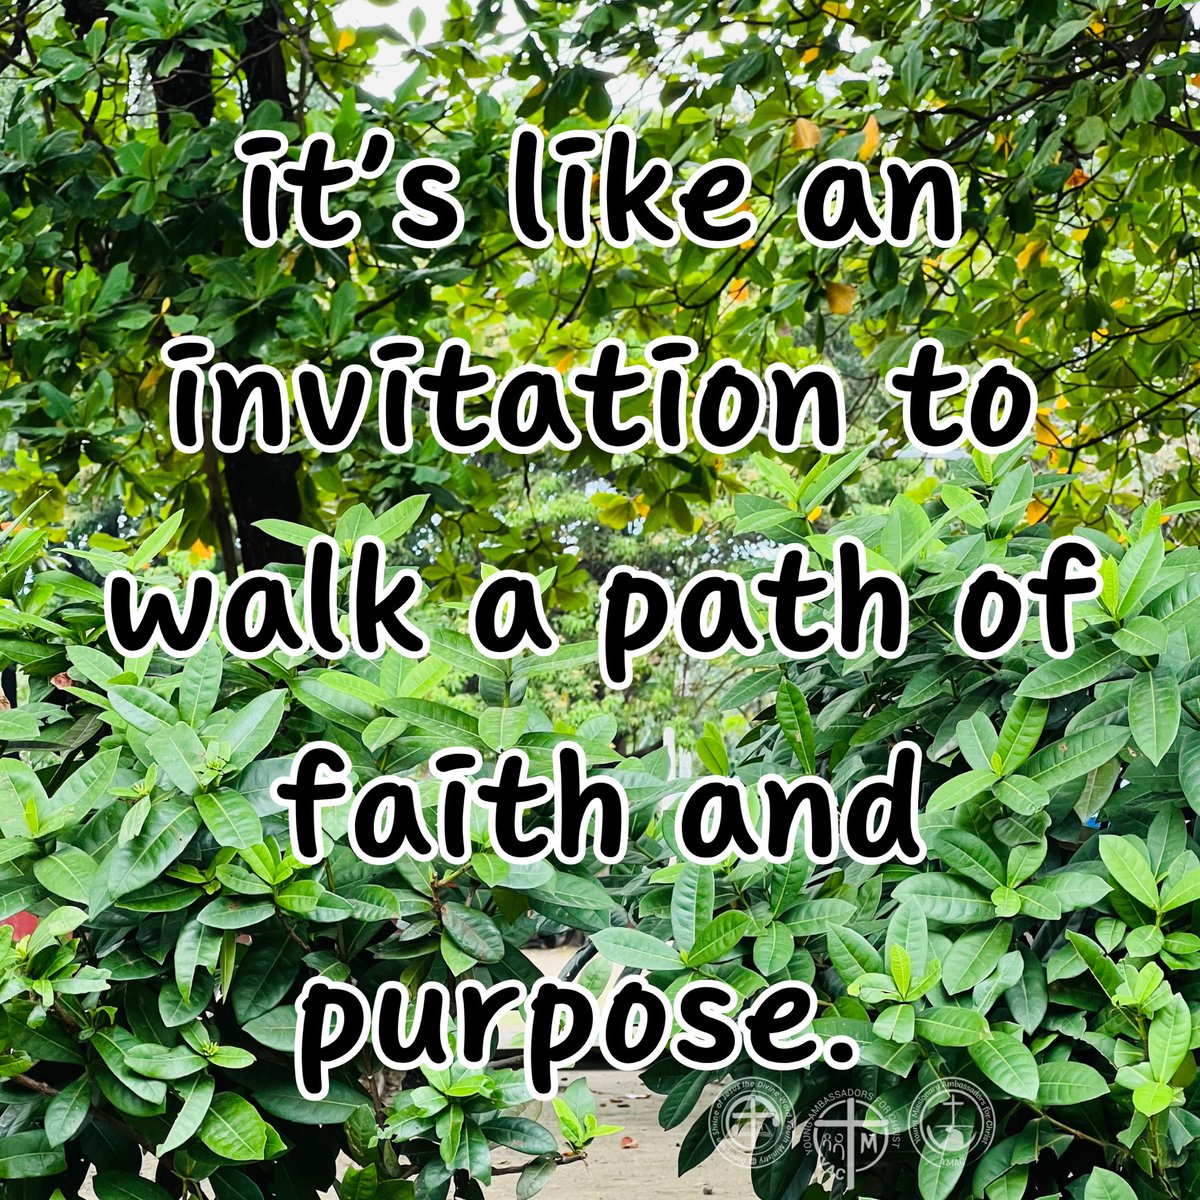 When God calls, it's like an invitation to walk a path of faith and purpose. 

#DivineGuidance #WalkingWithGod #PurposefulLiving #SimpleFaith #SpiritualPath #HigherCalling #MeaningfulLife

***

#YAC #YMAC #SYM #SVDyouth 
#SHRINEyouthMinistry #ShrineYouth